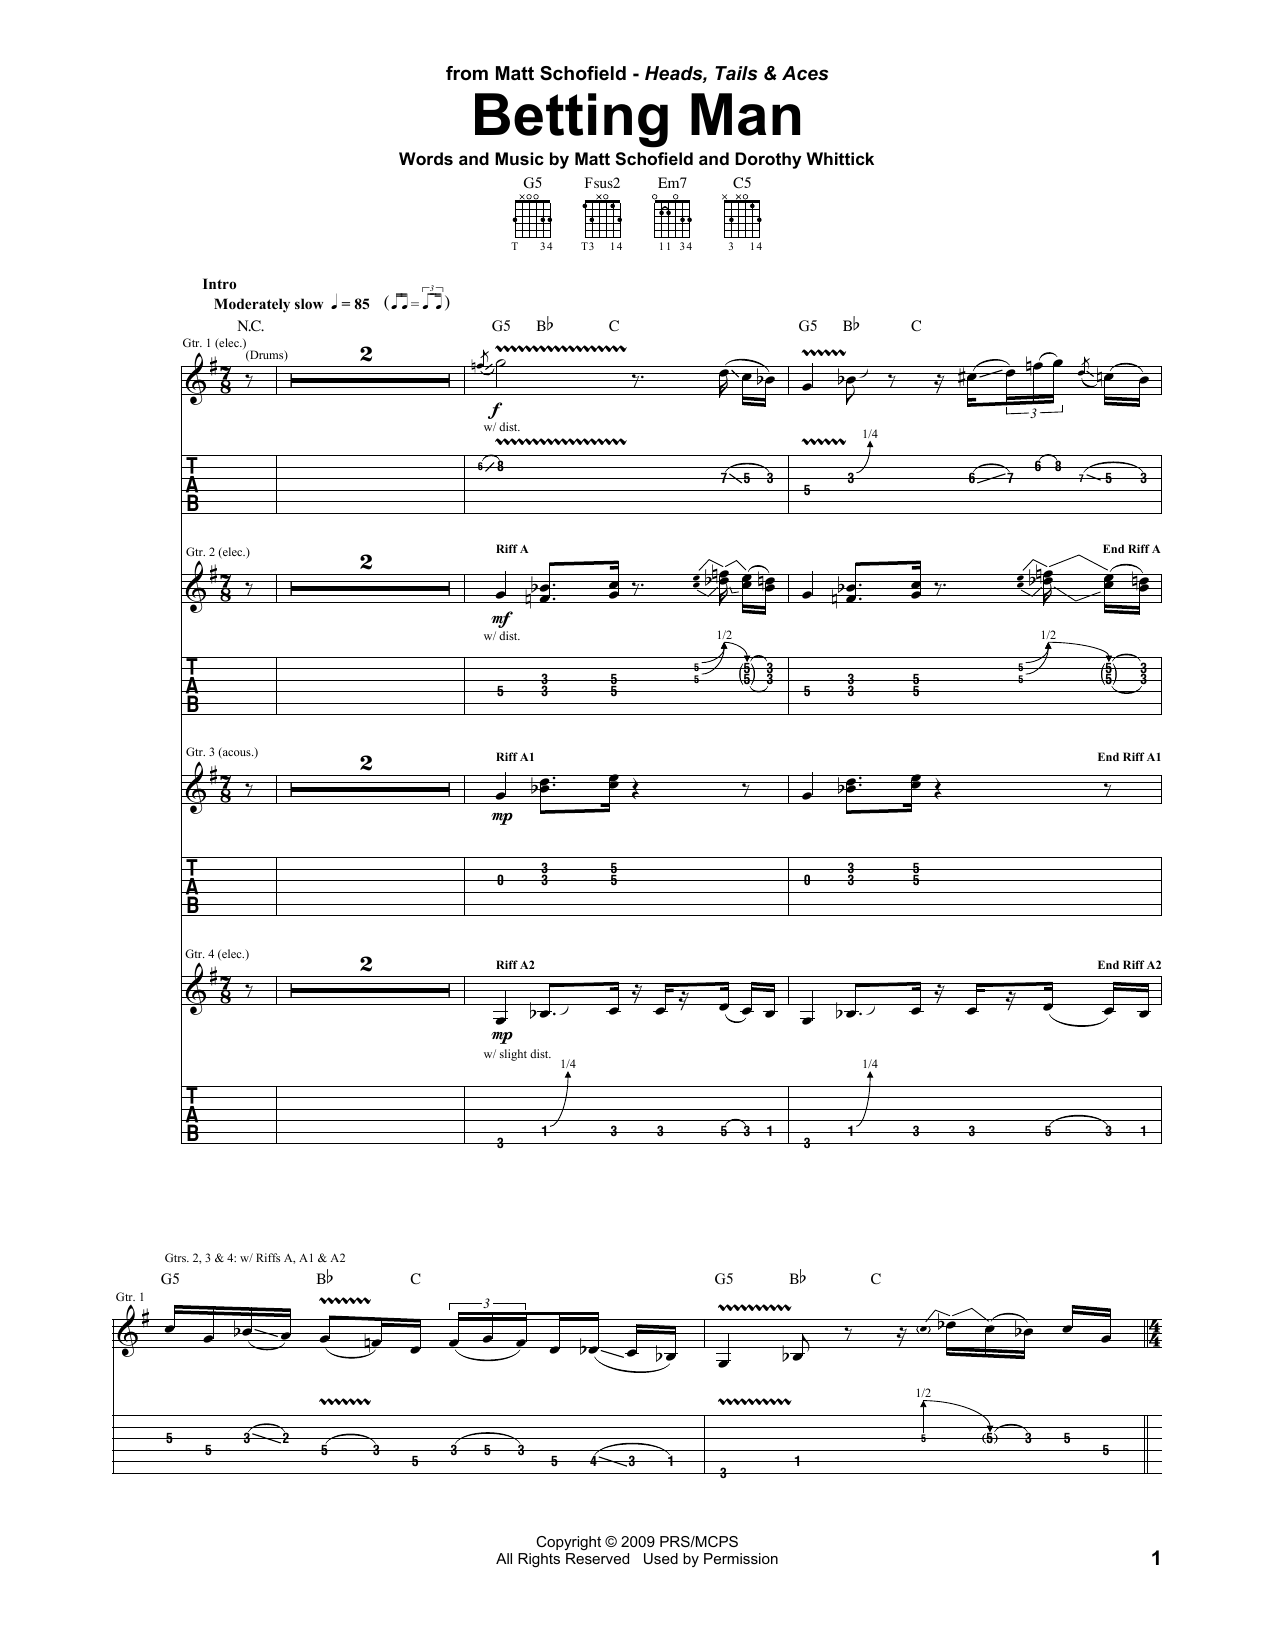 Matt Schofield Betting Man Sheet Music Notes & Chords for Guitar Tab - Download or Print PDF